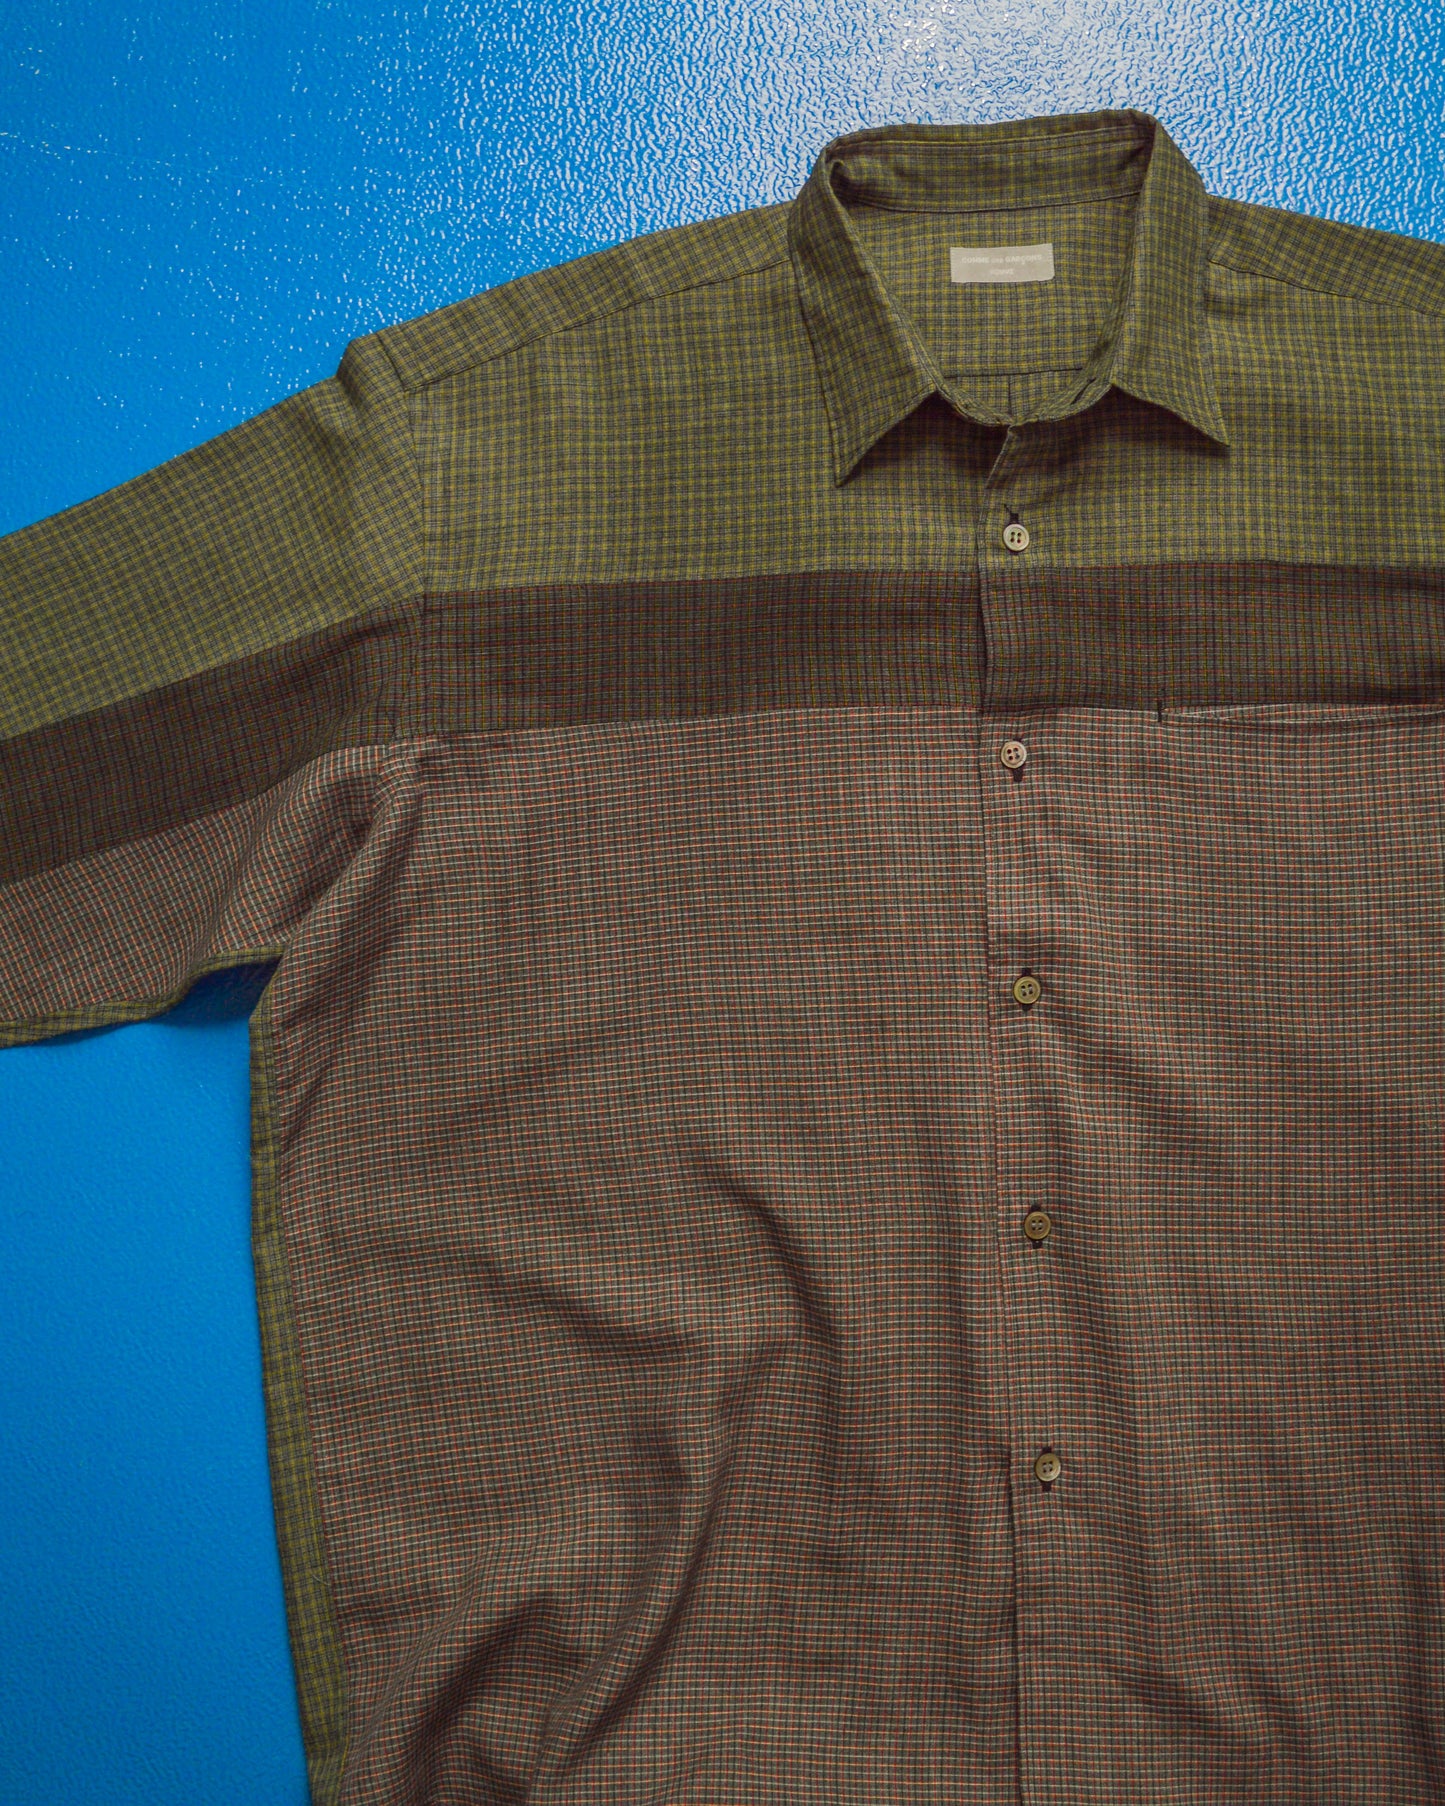 90s Mixed Plaid Panelled Shirt (L~XL)